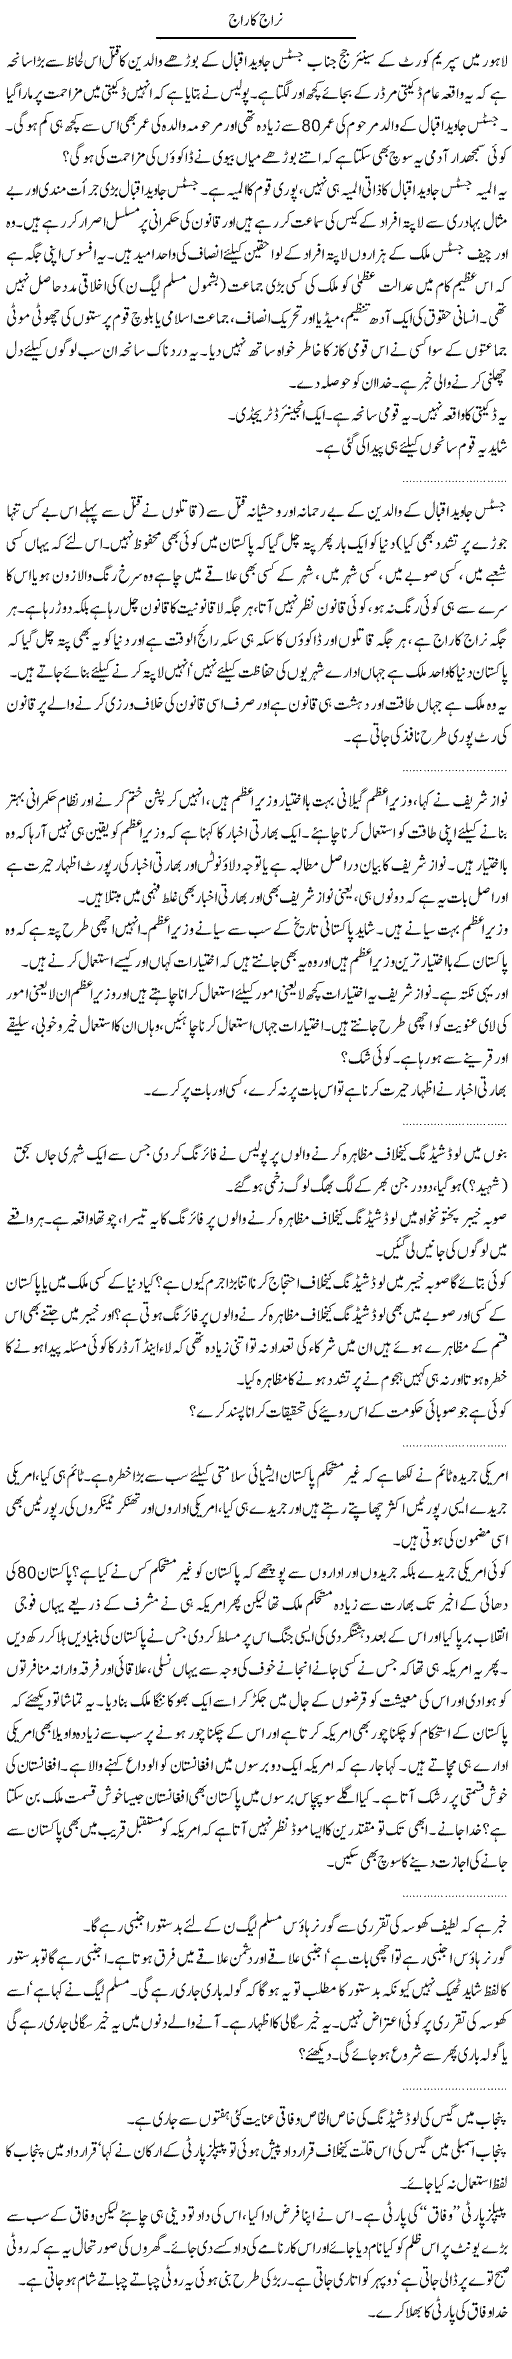 Justice Javed Iqbal Express Column Abdullah Tariq 13 January 2011